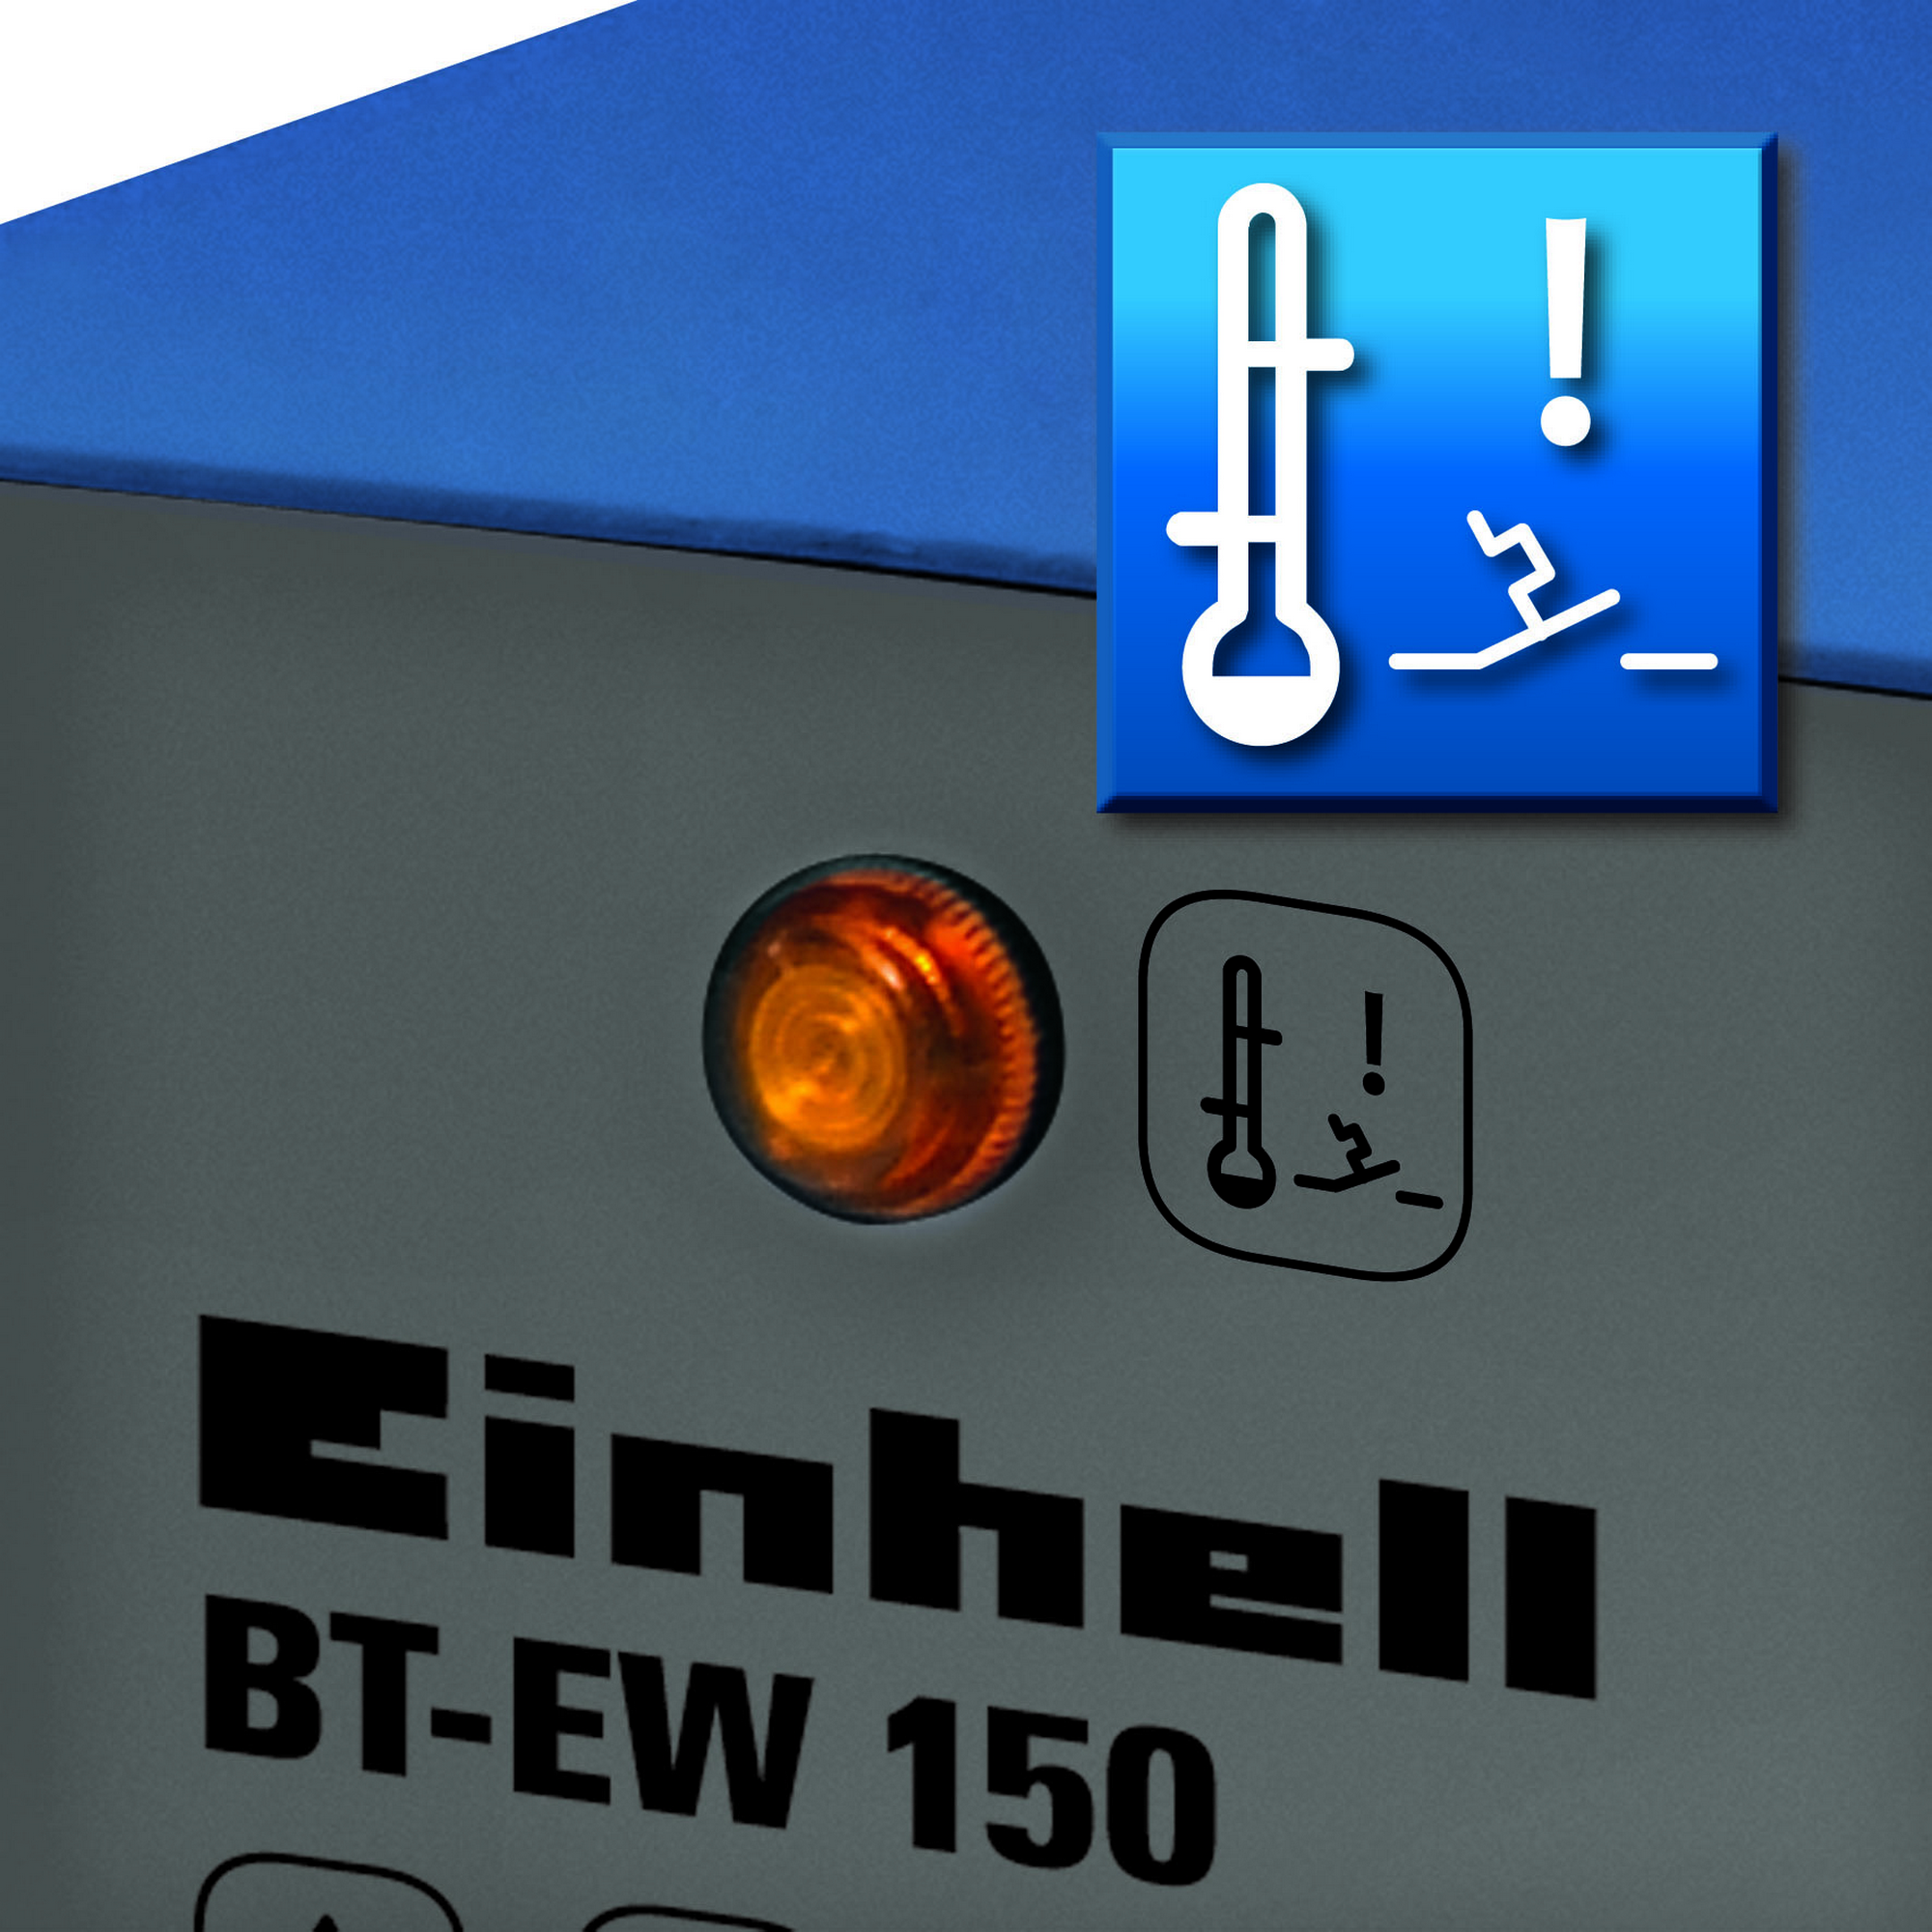 Elektro-Schweißgerät 'BT-EW 150' mehrfarbig 230 V, 40-80 A + product picture